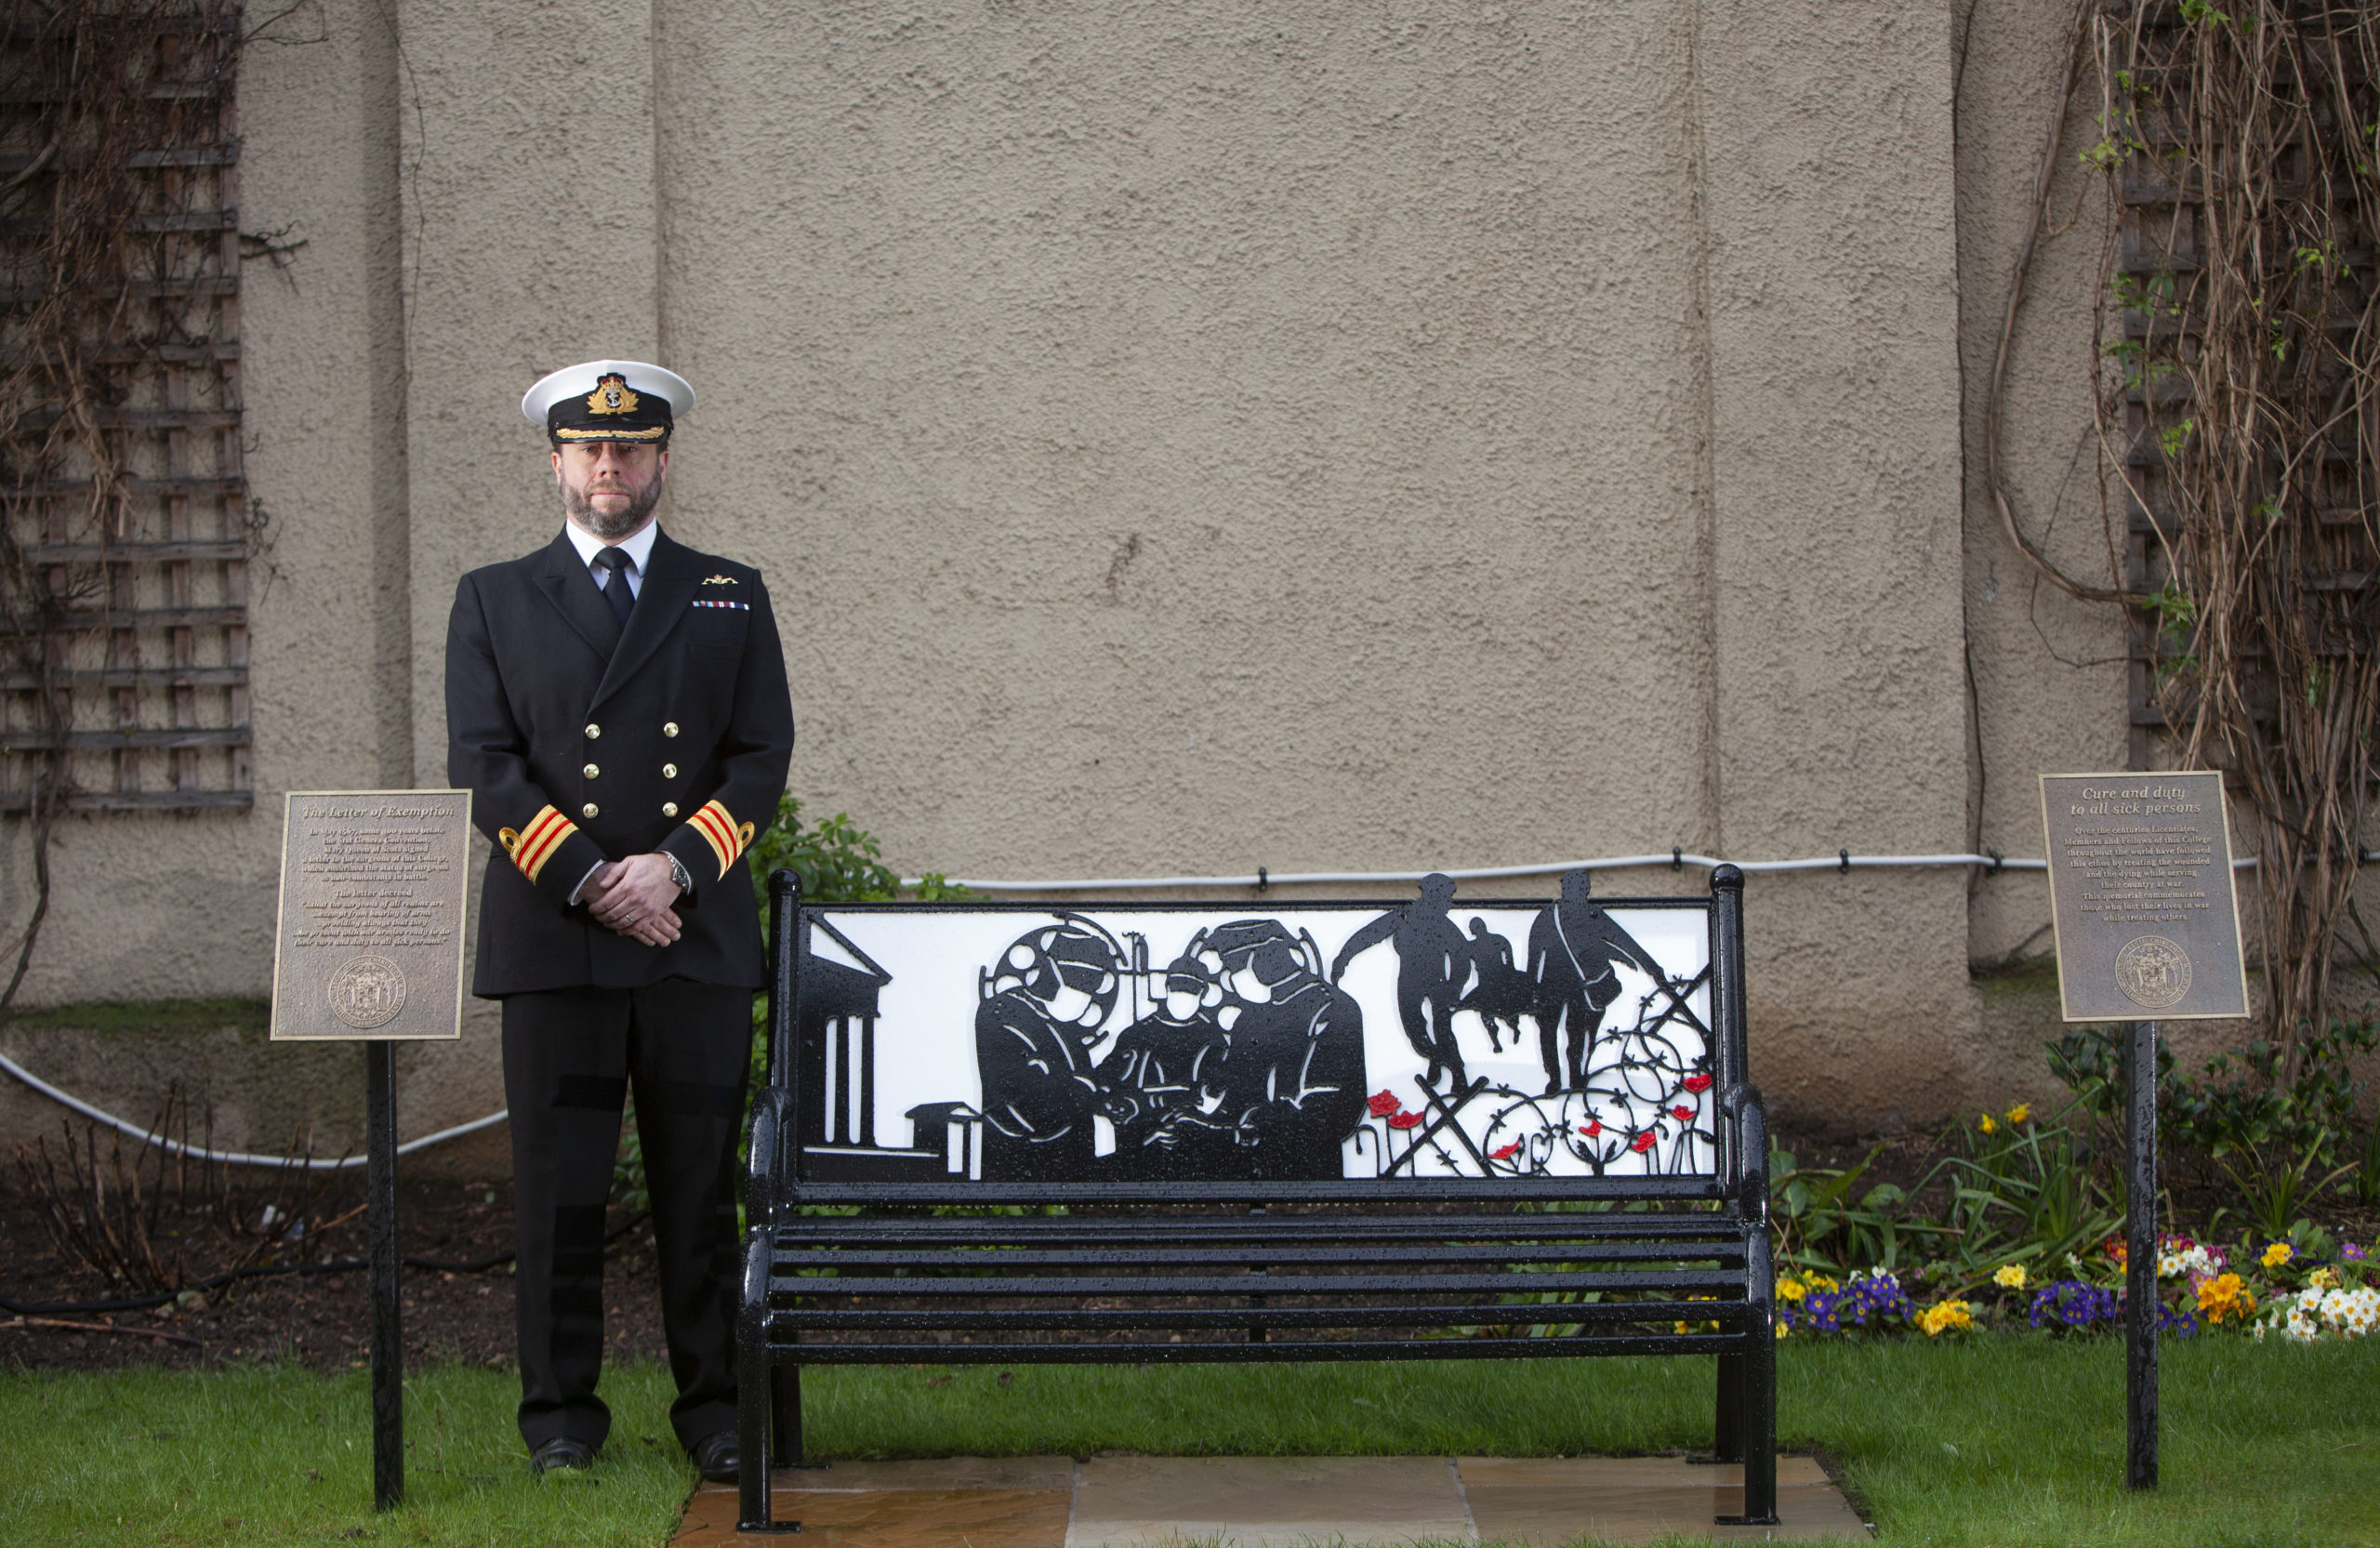 Edinburgh: The bench and bronze plaques.